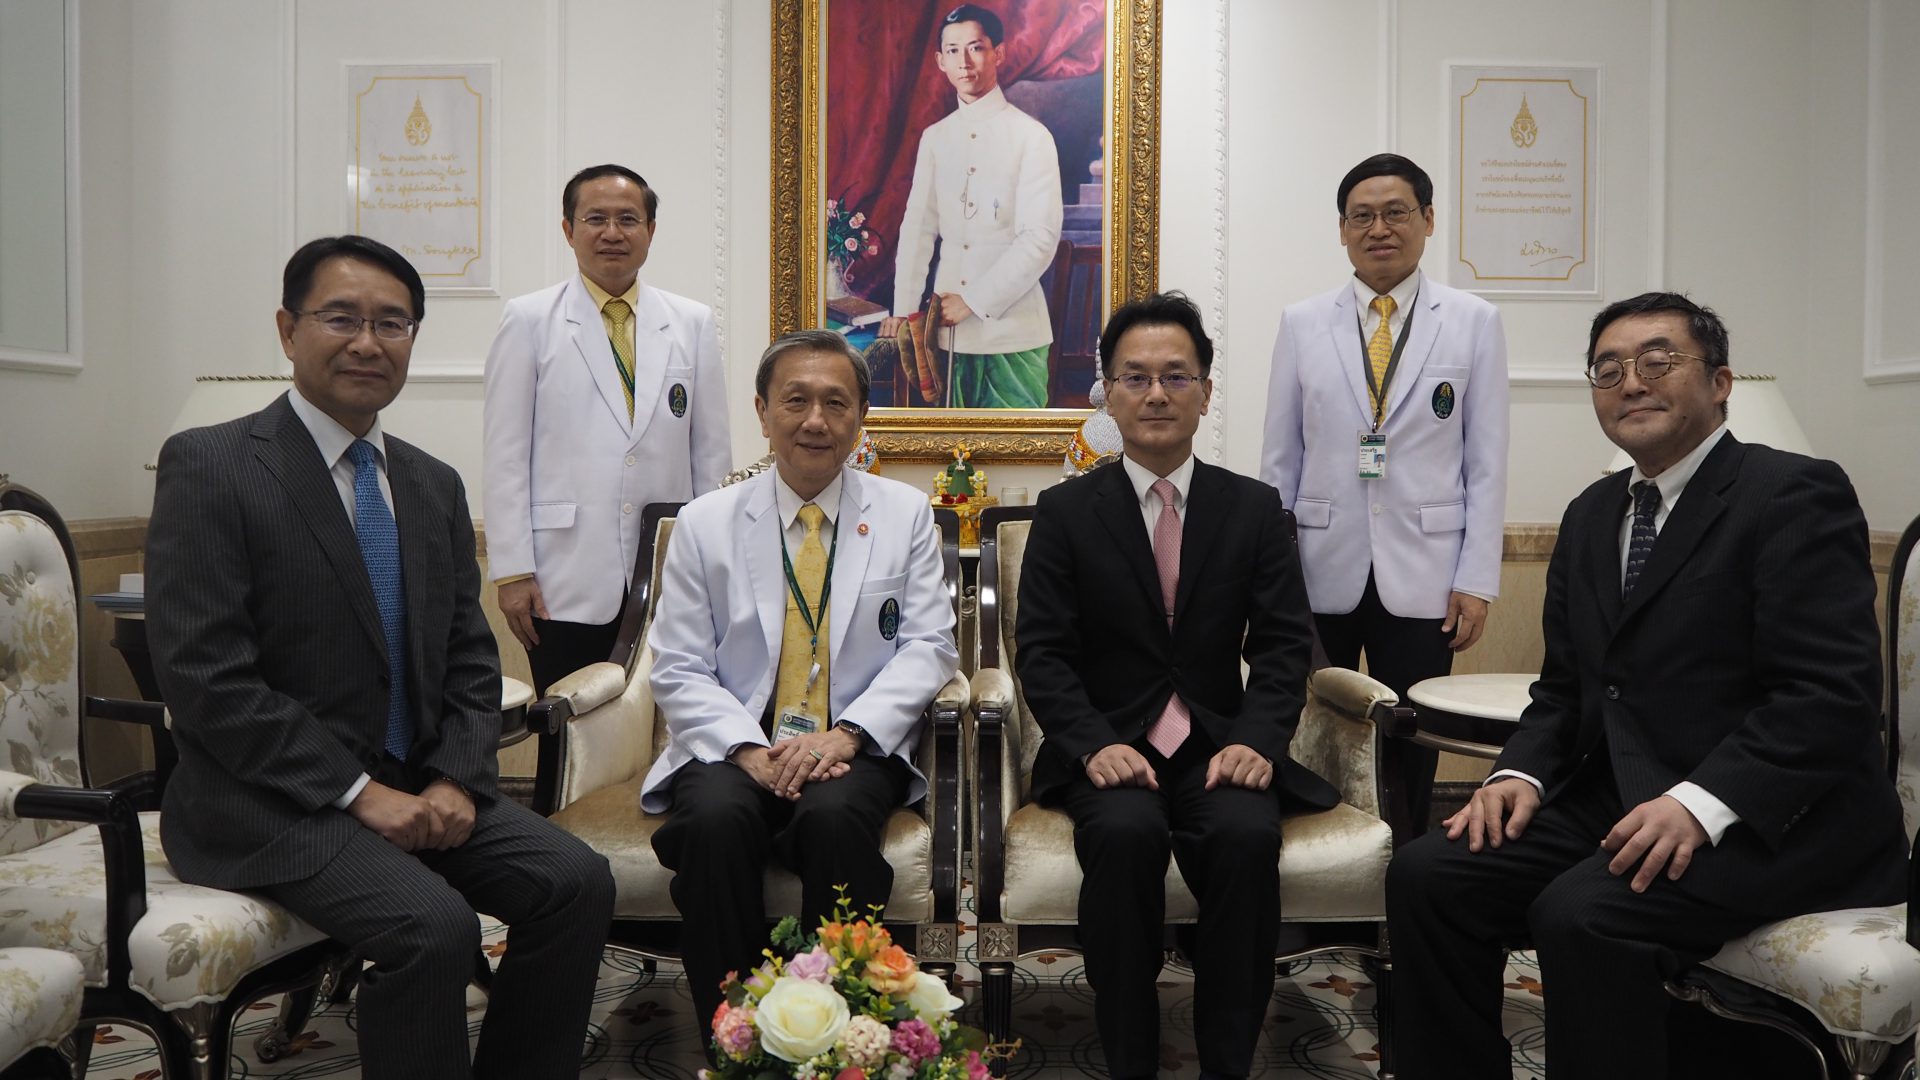 National Center for Geriatrics and Gerontology Hospital Japan Visits Siriraj